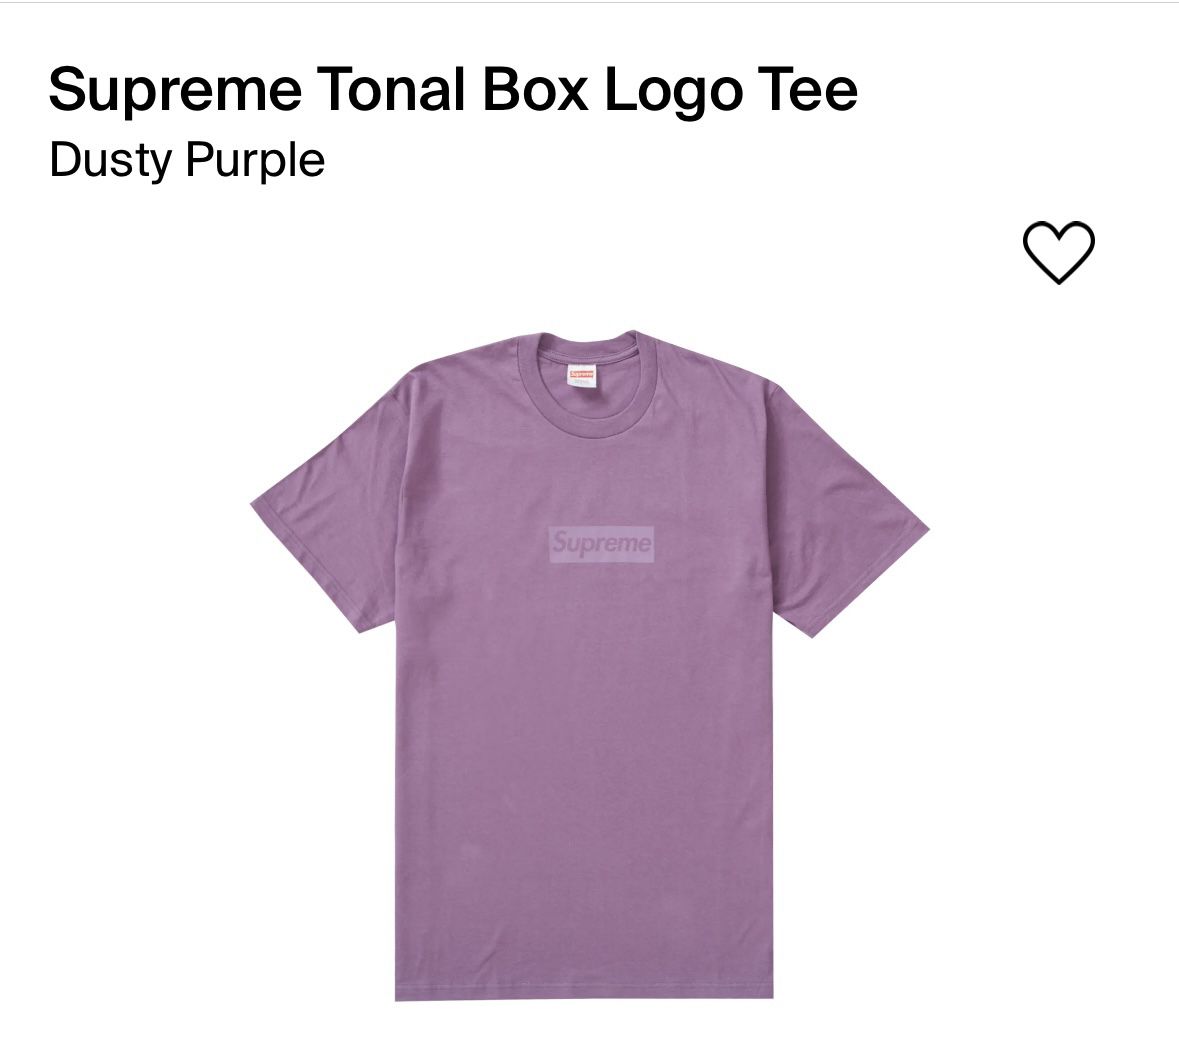 Medium Brand New Unopened Supreme Tonal Box Logo Tee - Dusty Purple 